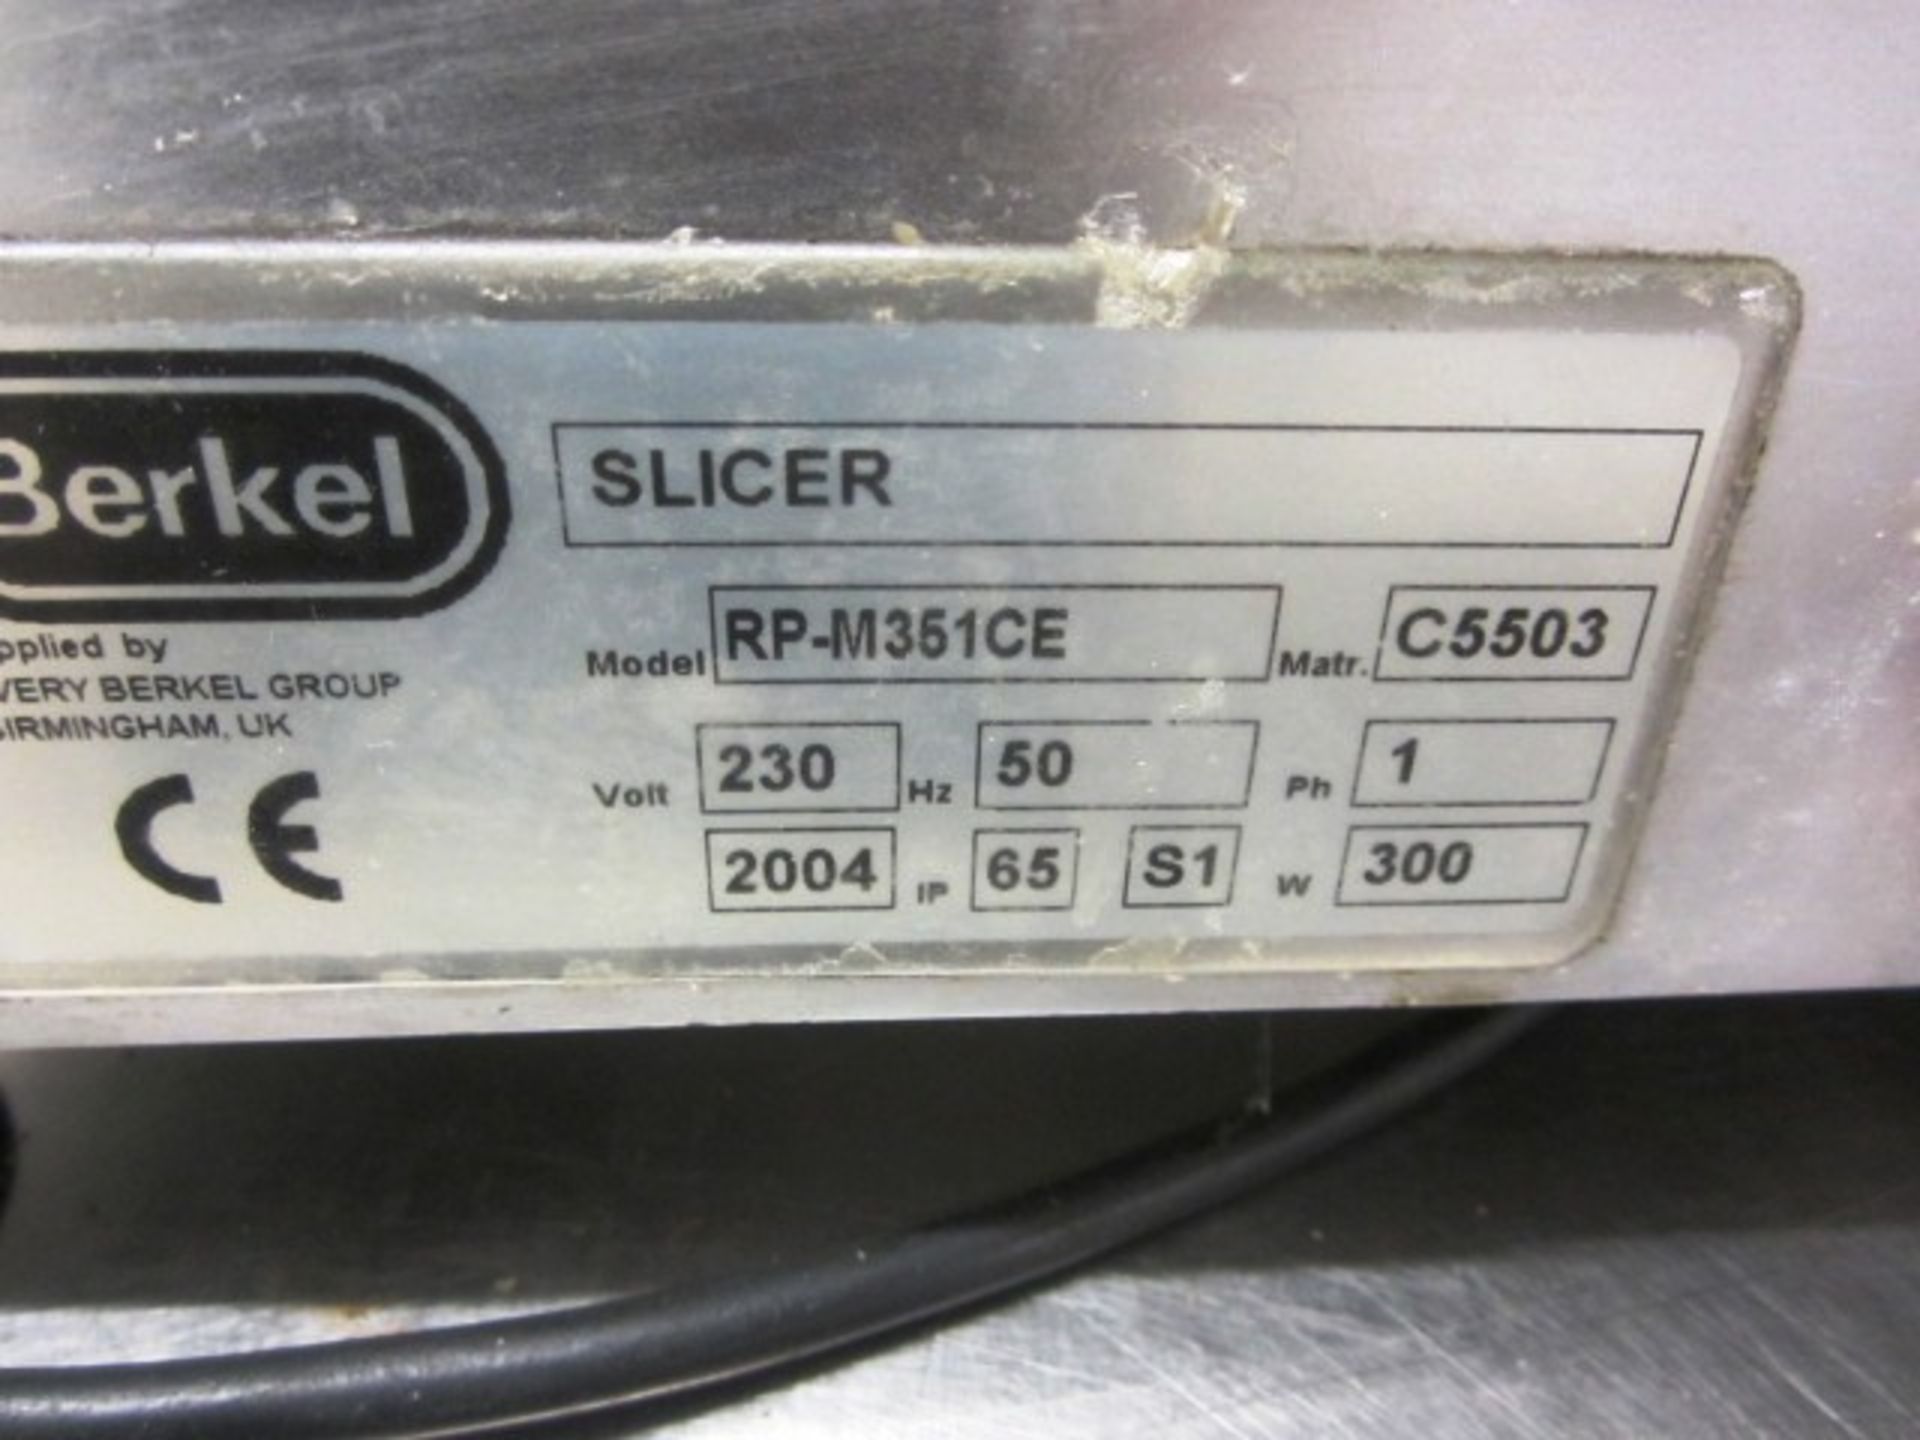 Berkel aluminium bench top meat slicer, model RP-M-351CE, serial no. CS503 (2004), single phase - Image 3 of 4